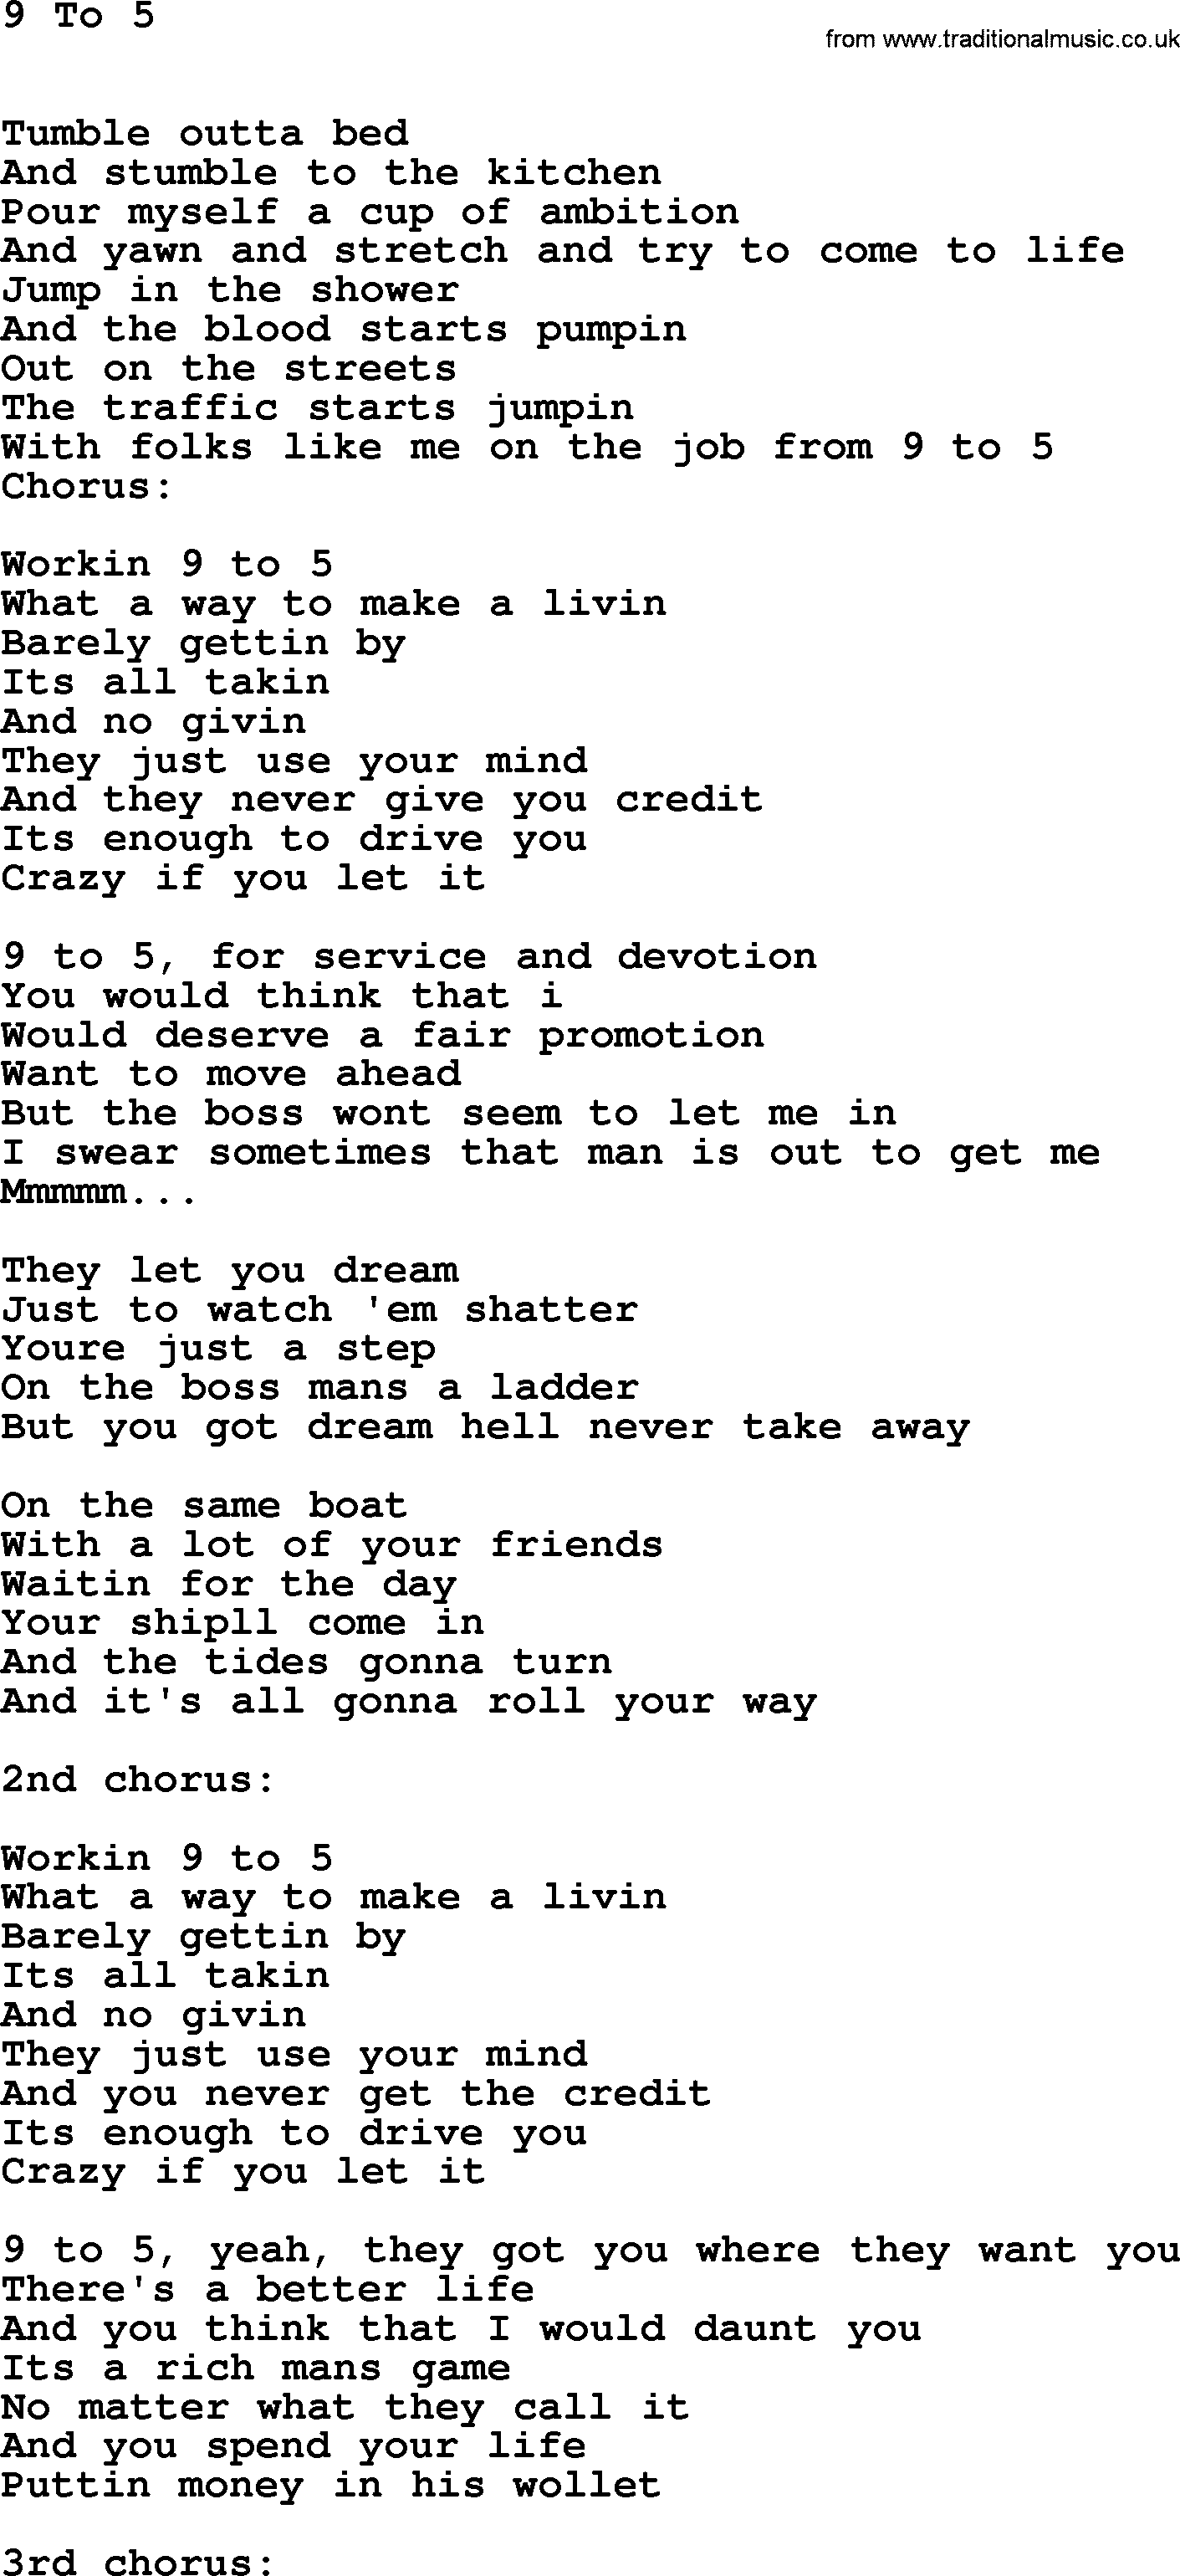 Dolly Parton song: 9 To 5, lyrics